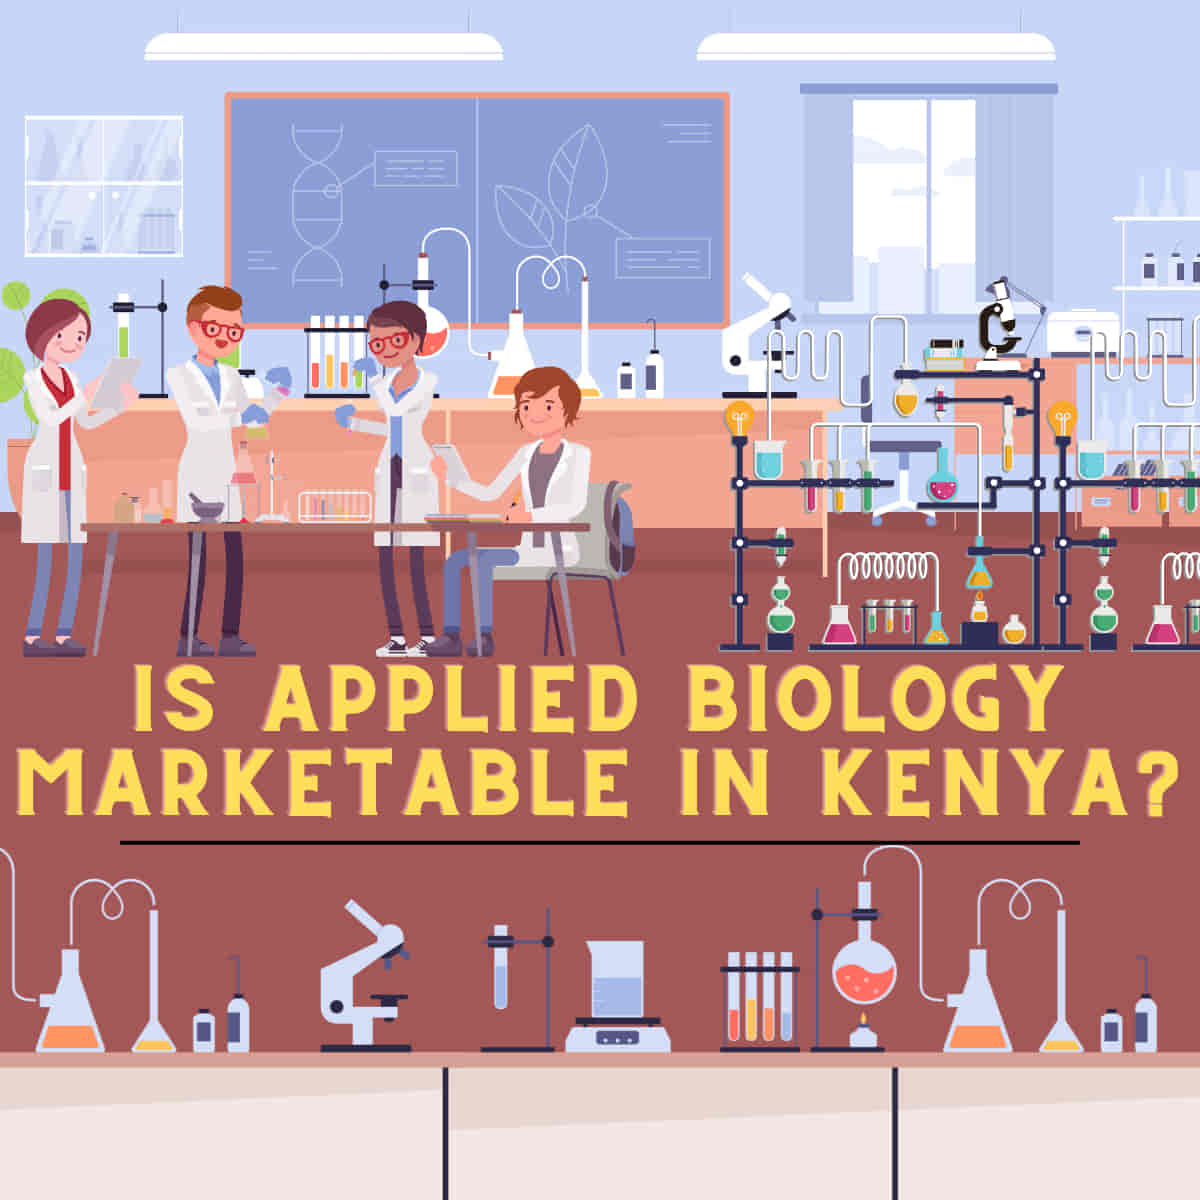 Is applied biology marketable in Kenya